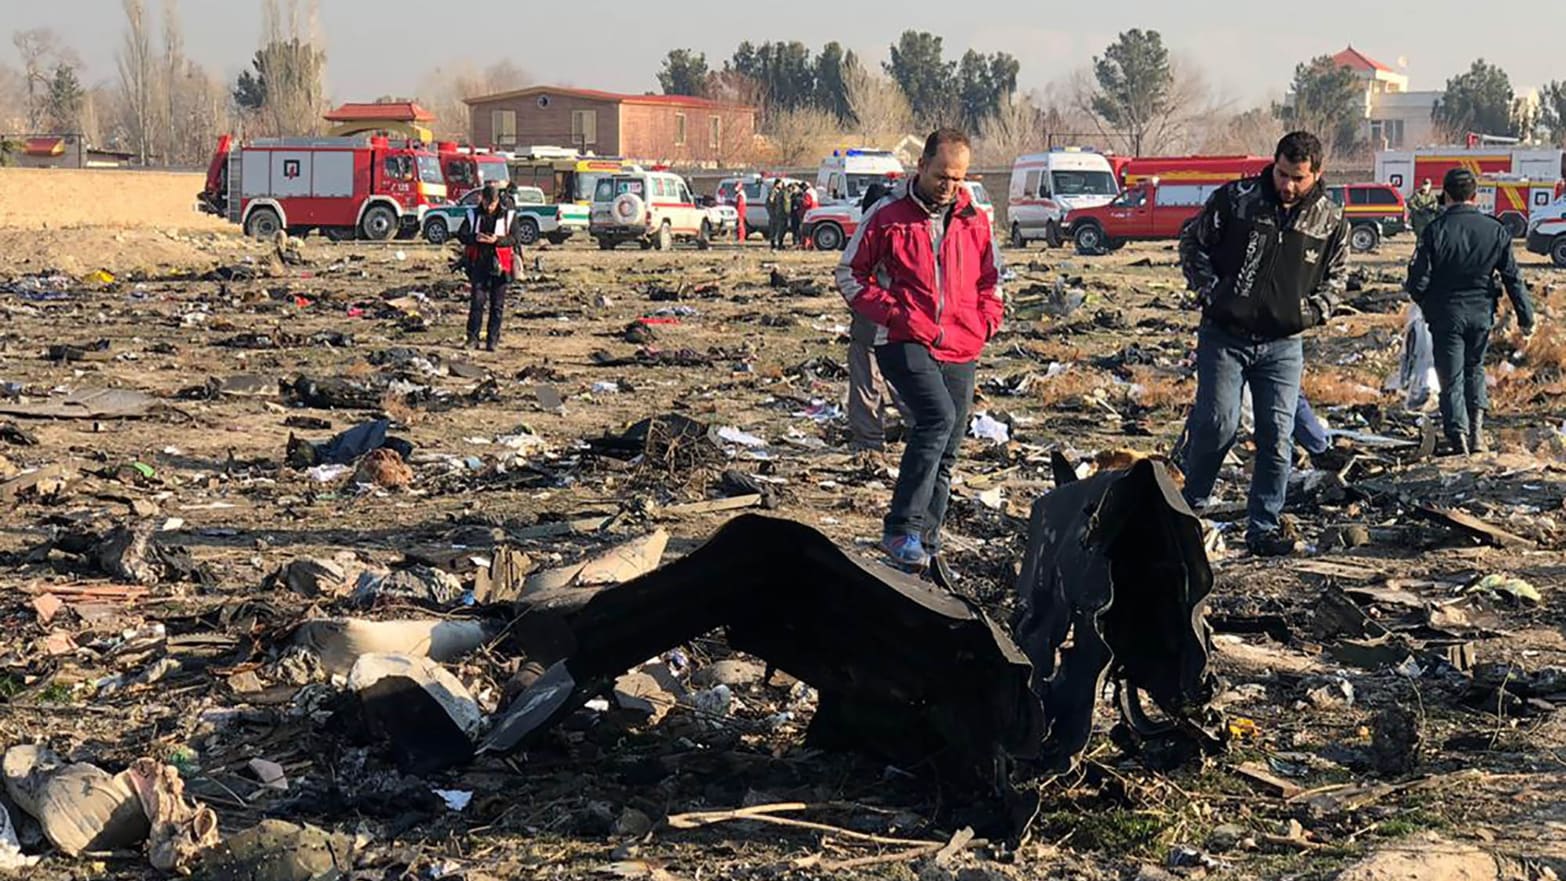 With 176 Dead in Iran on Ukraine International Airlines Flight 752